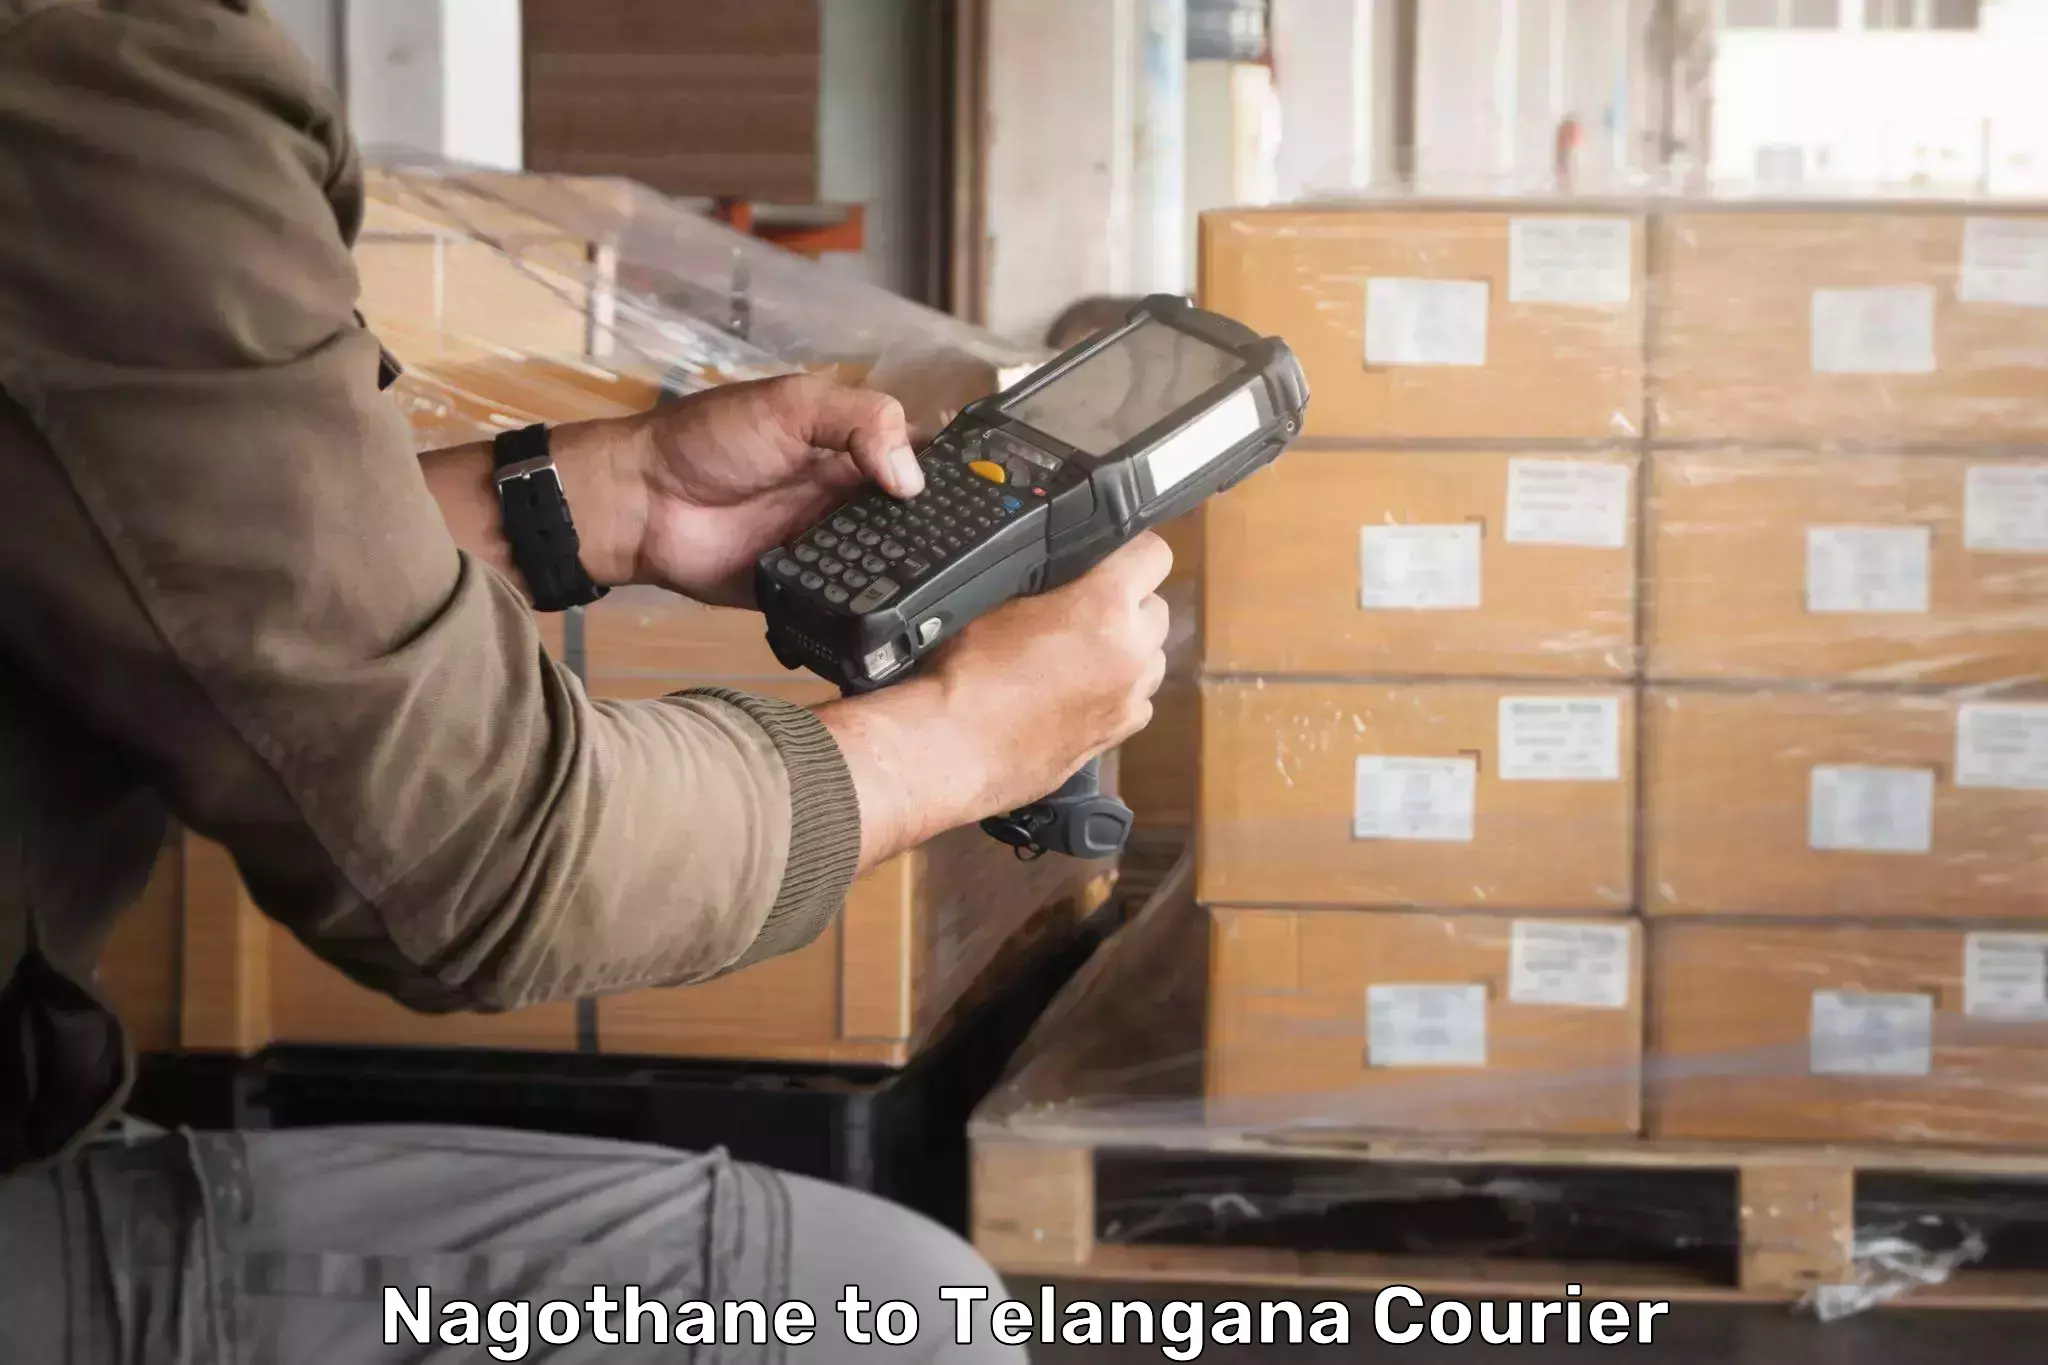 Nationwide delivery network in Nagothane to Dharmapuri Jagtial